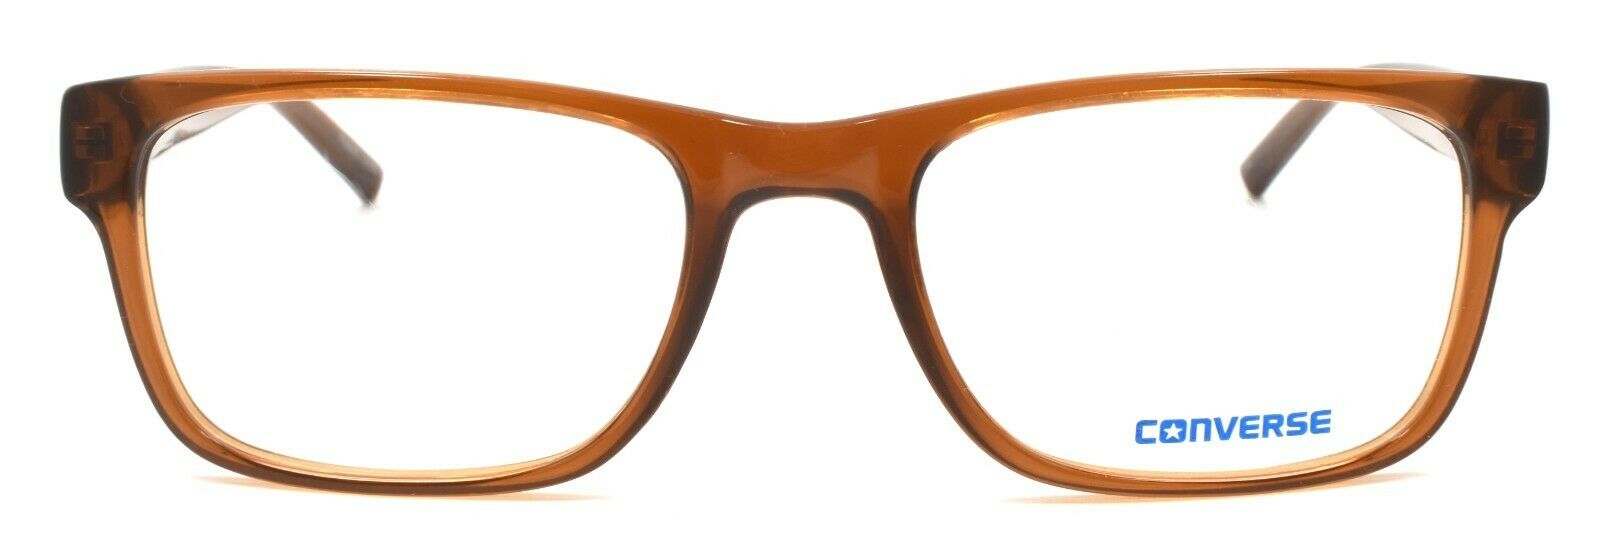 2-CONVERSE Q042 Men's Eyeglasses Frames 52-19-135 Brown + CASE-751286280401-IKSpecs